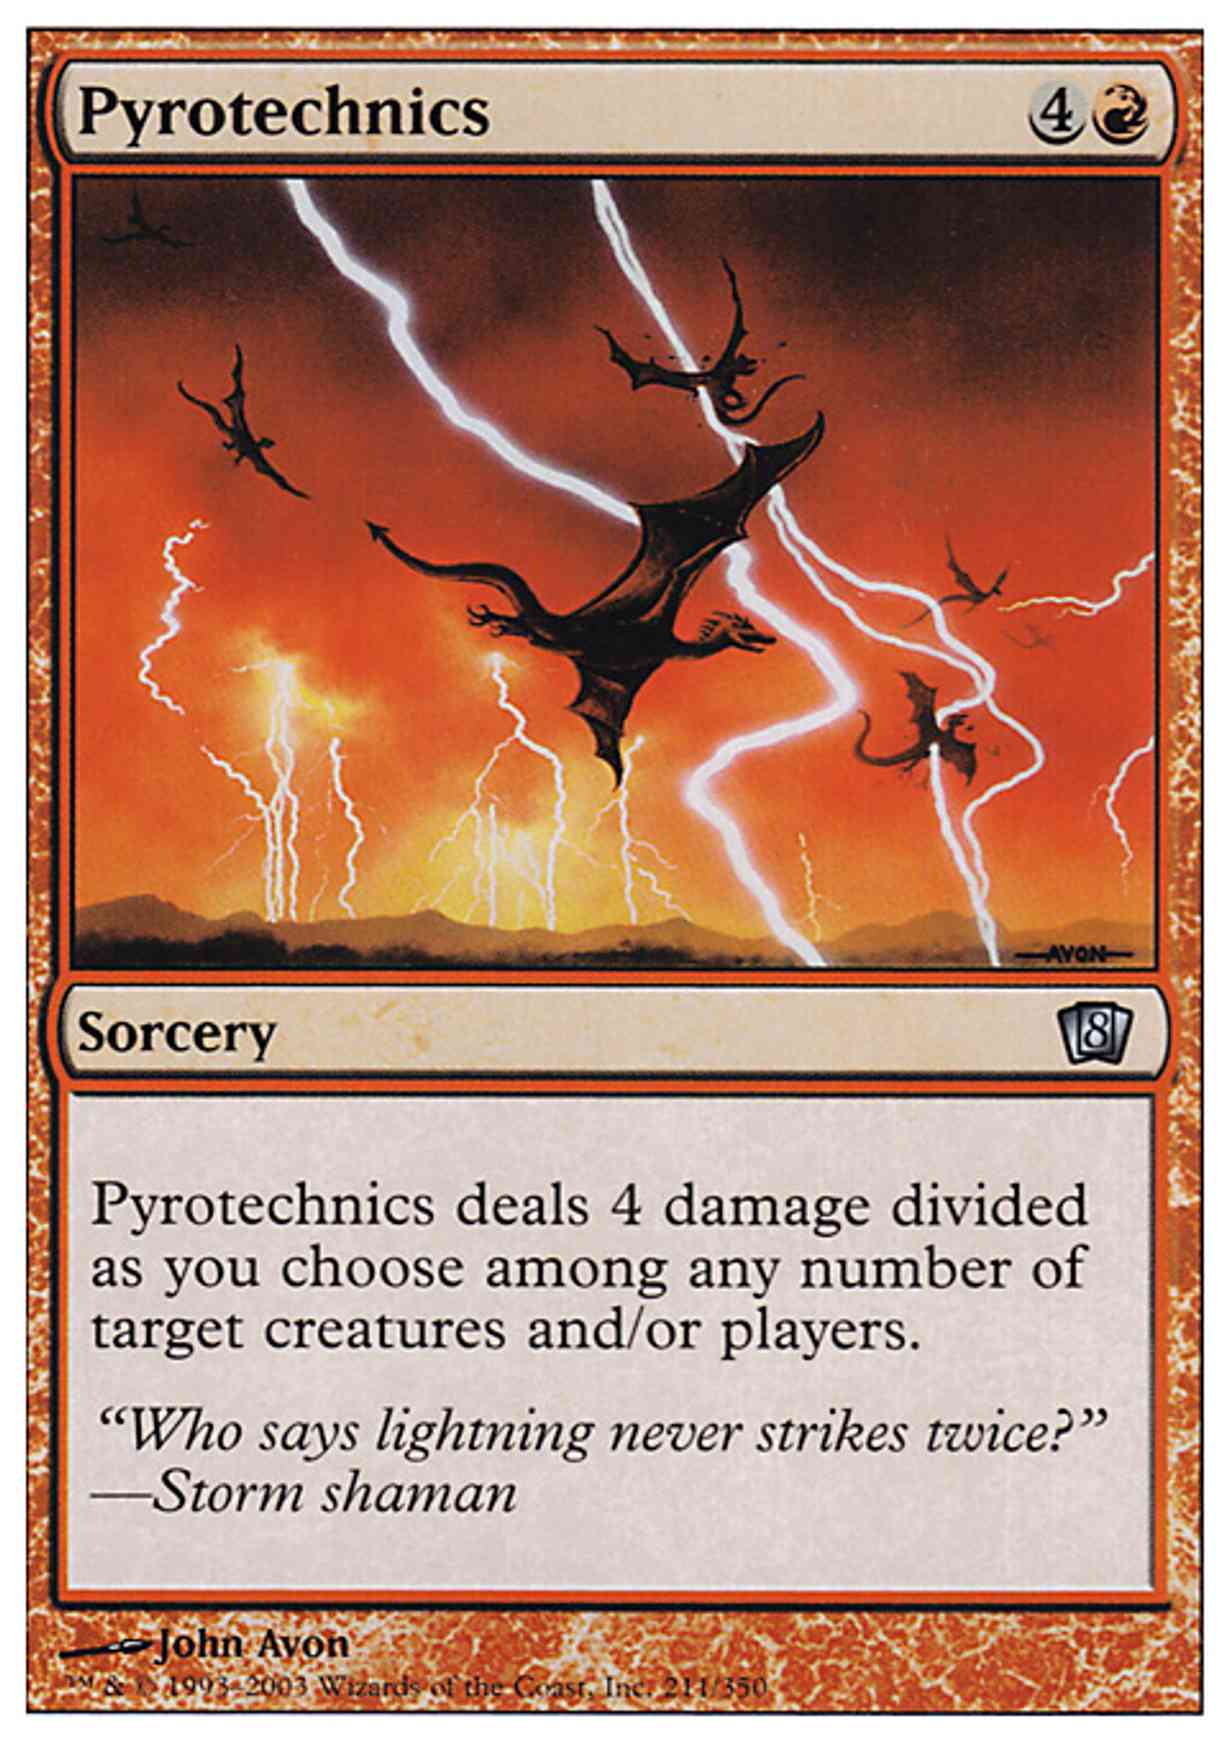 Pyrotechnics magic card front